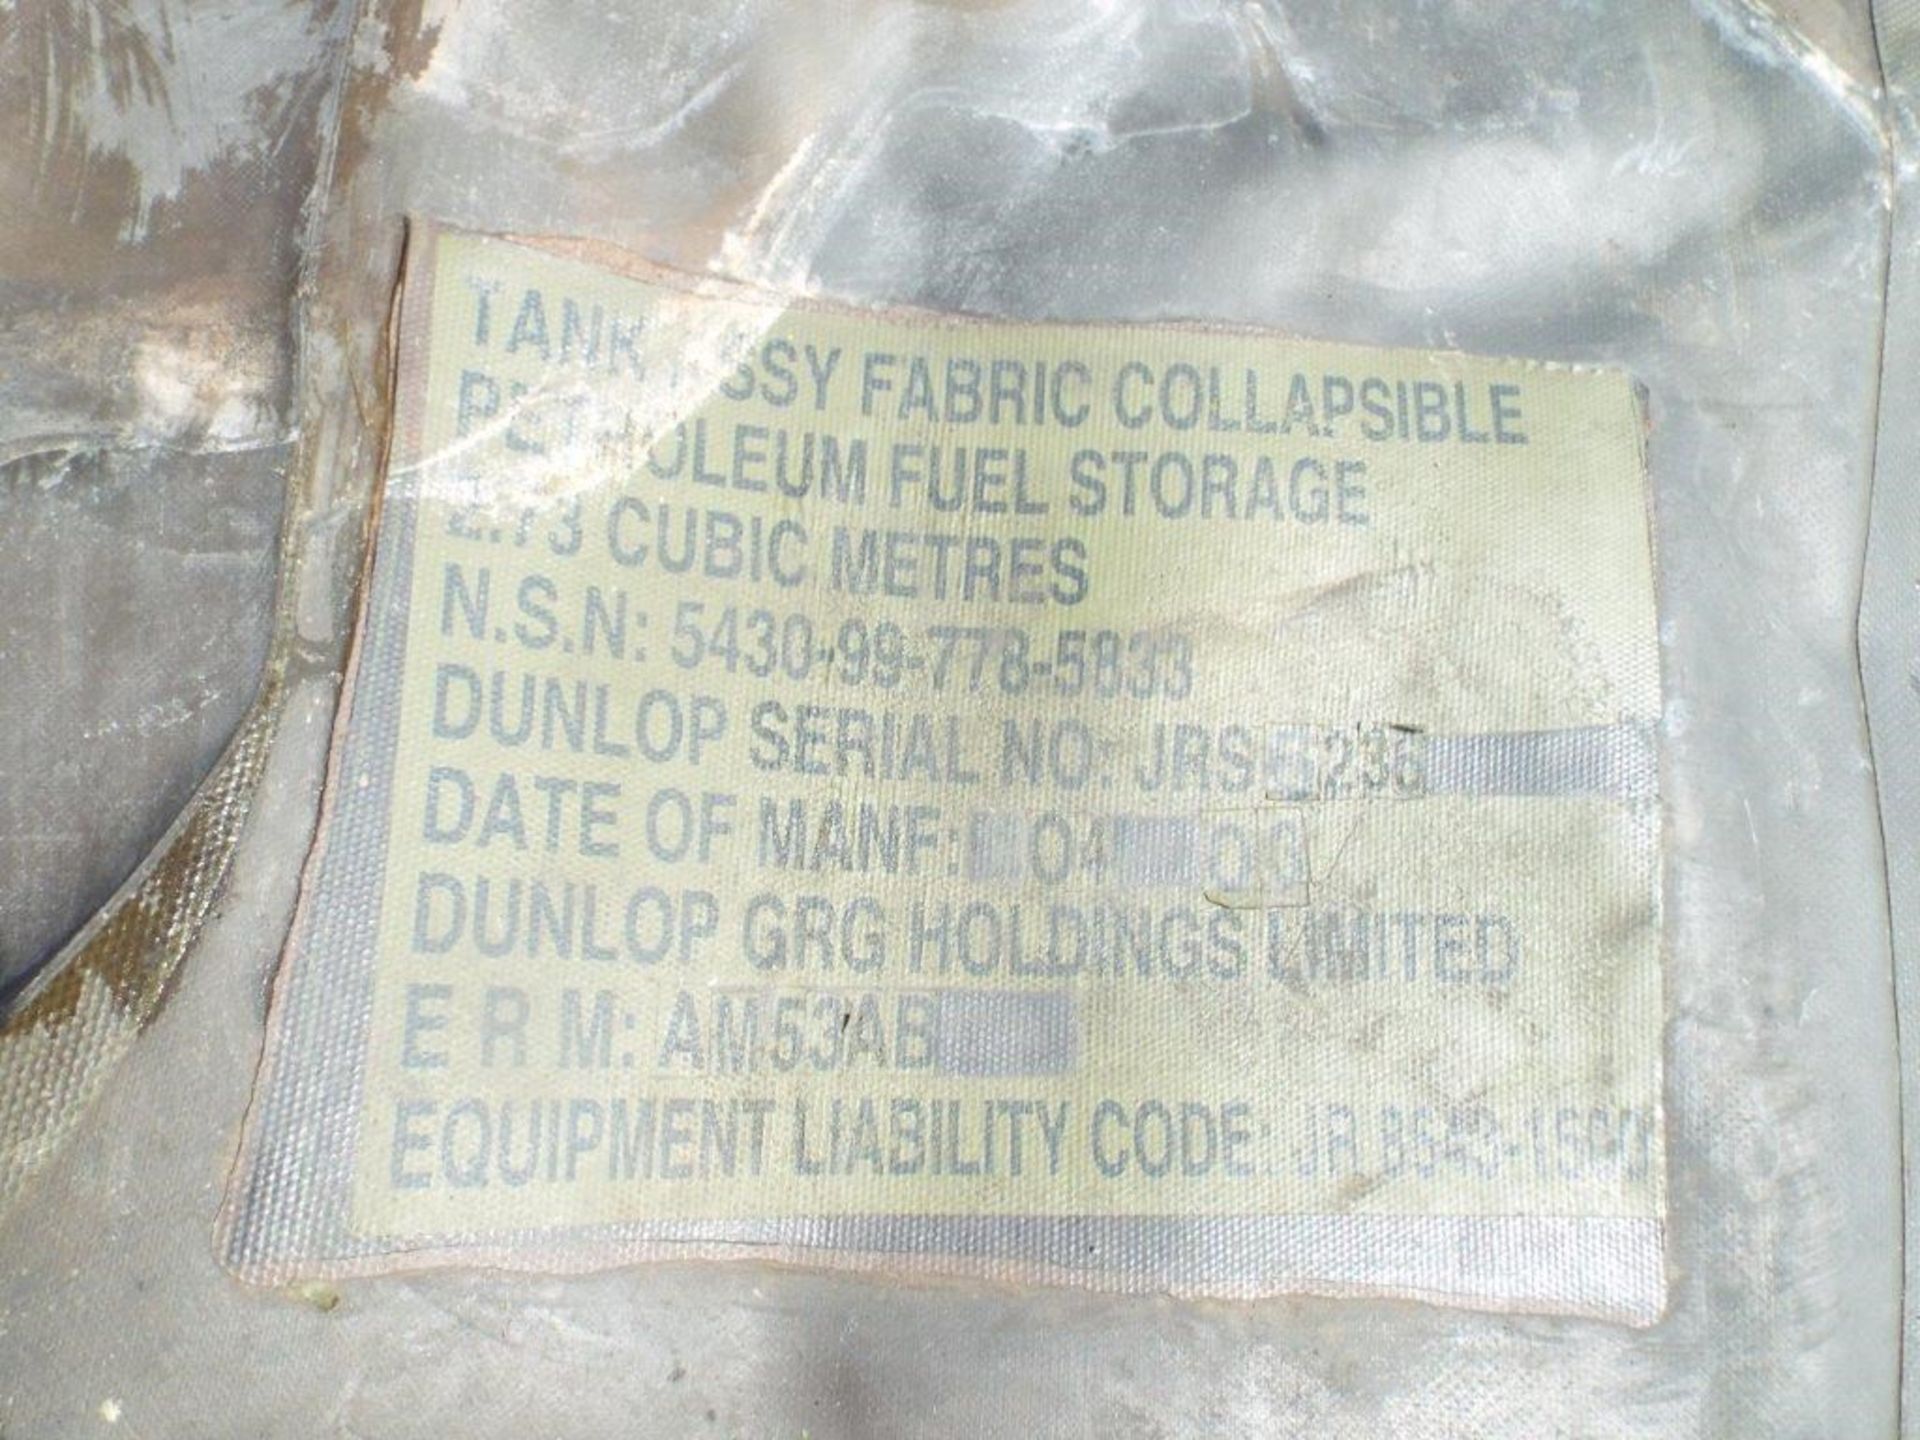 Dunlop 600 Gal Collapsible Fuel/Fluid Storage Bladder - Image 6 of 7